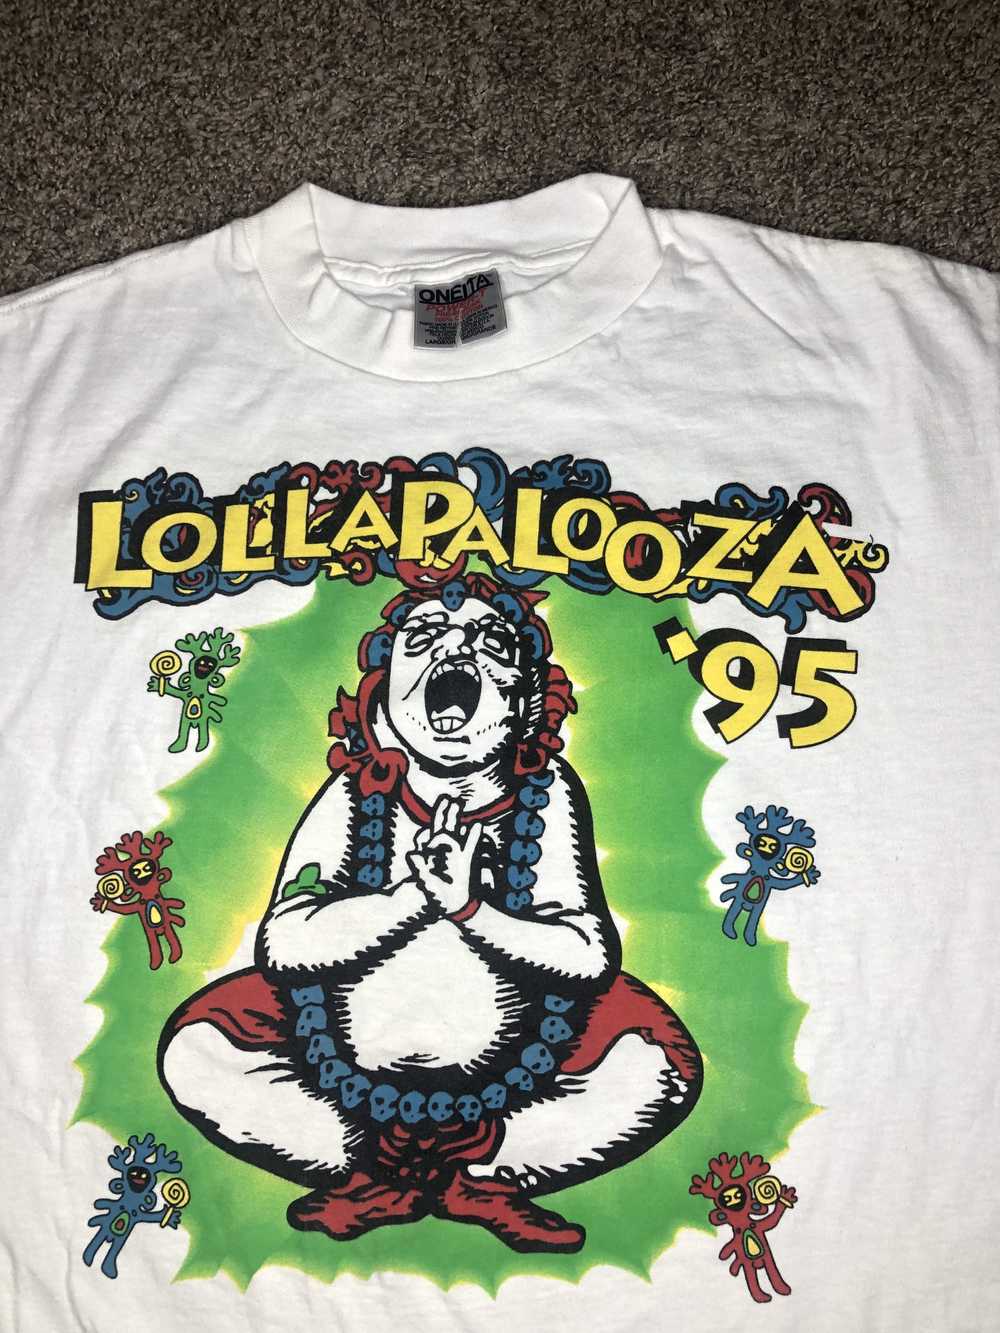 1995 Lollapalooza Tour Tee - image 2